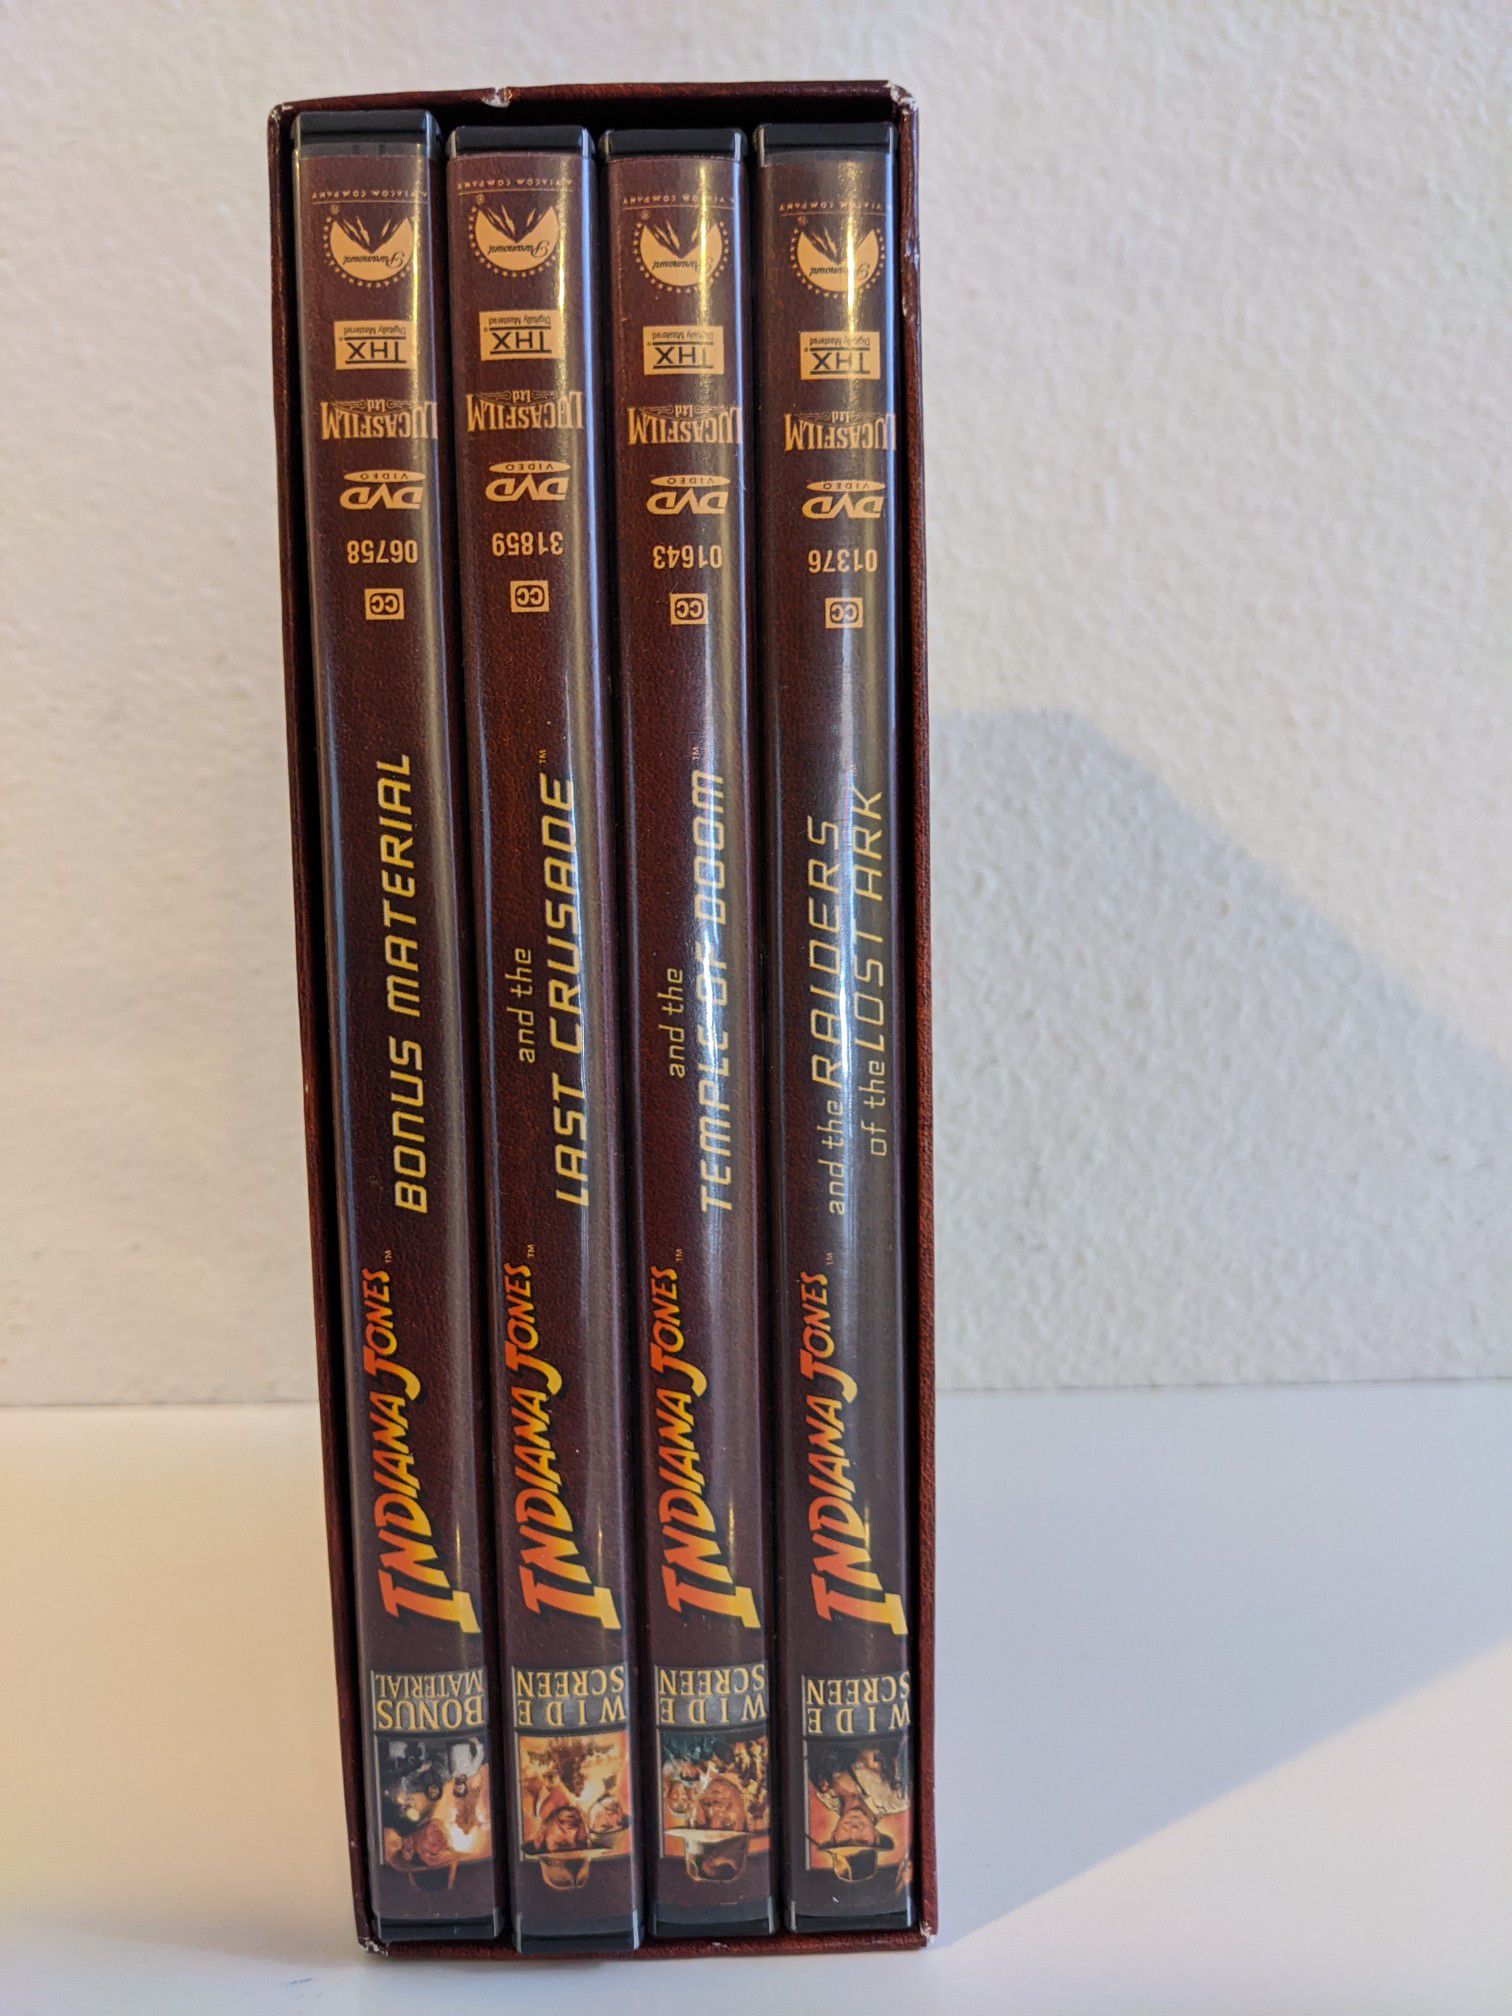 Indiana Jones original trilogy dvd set + bonus material